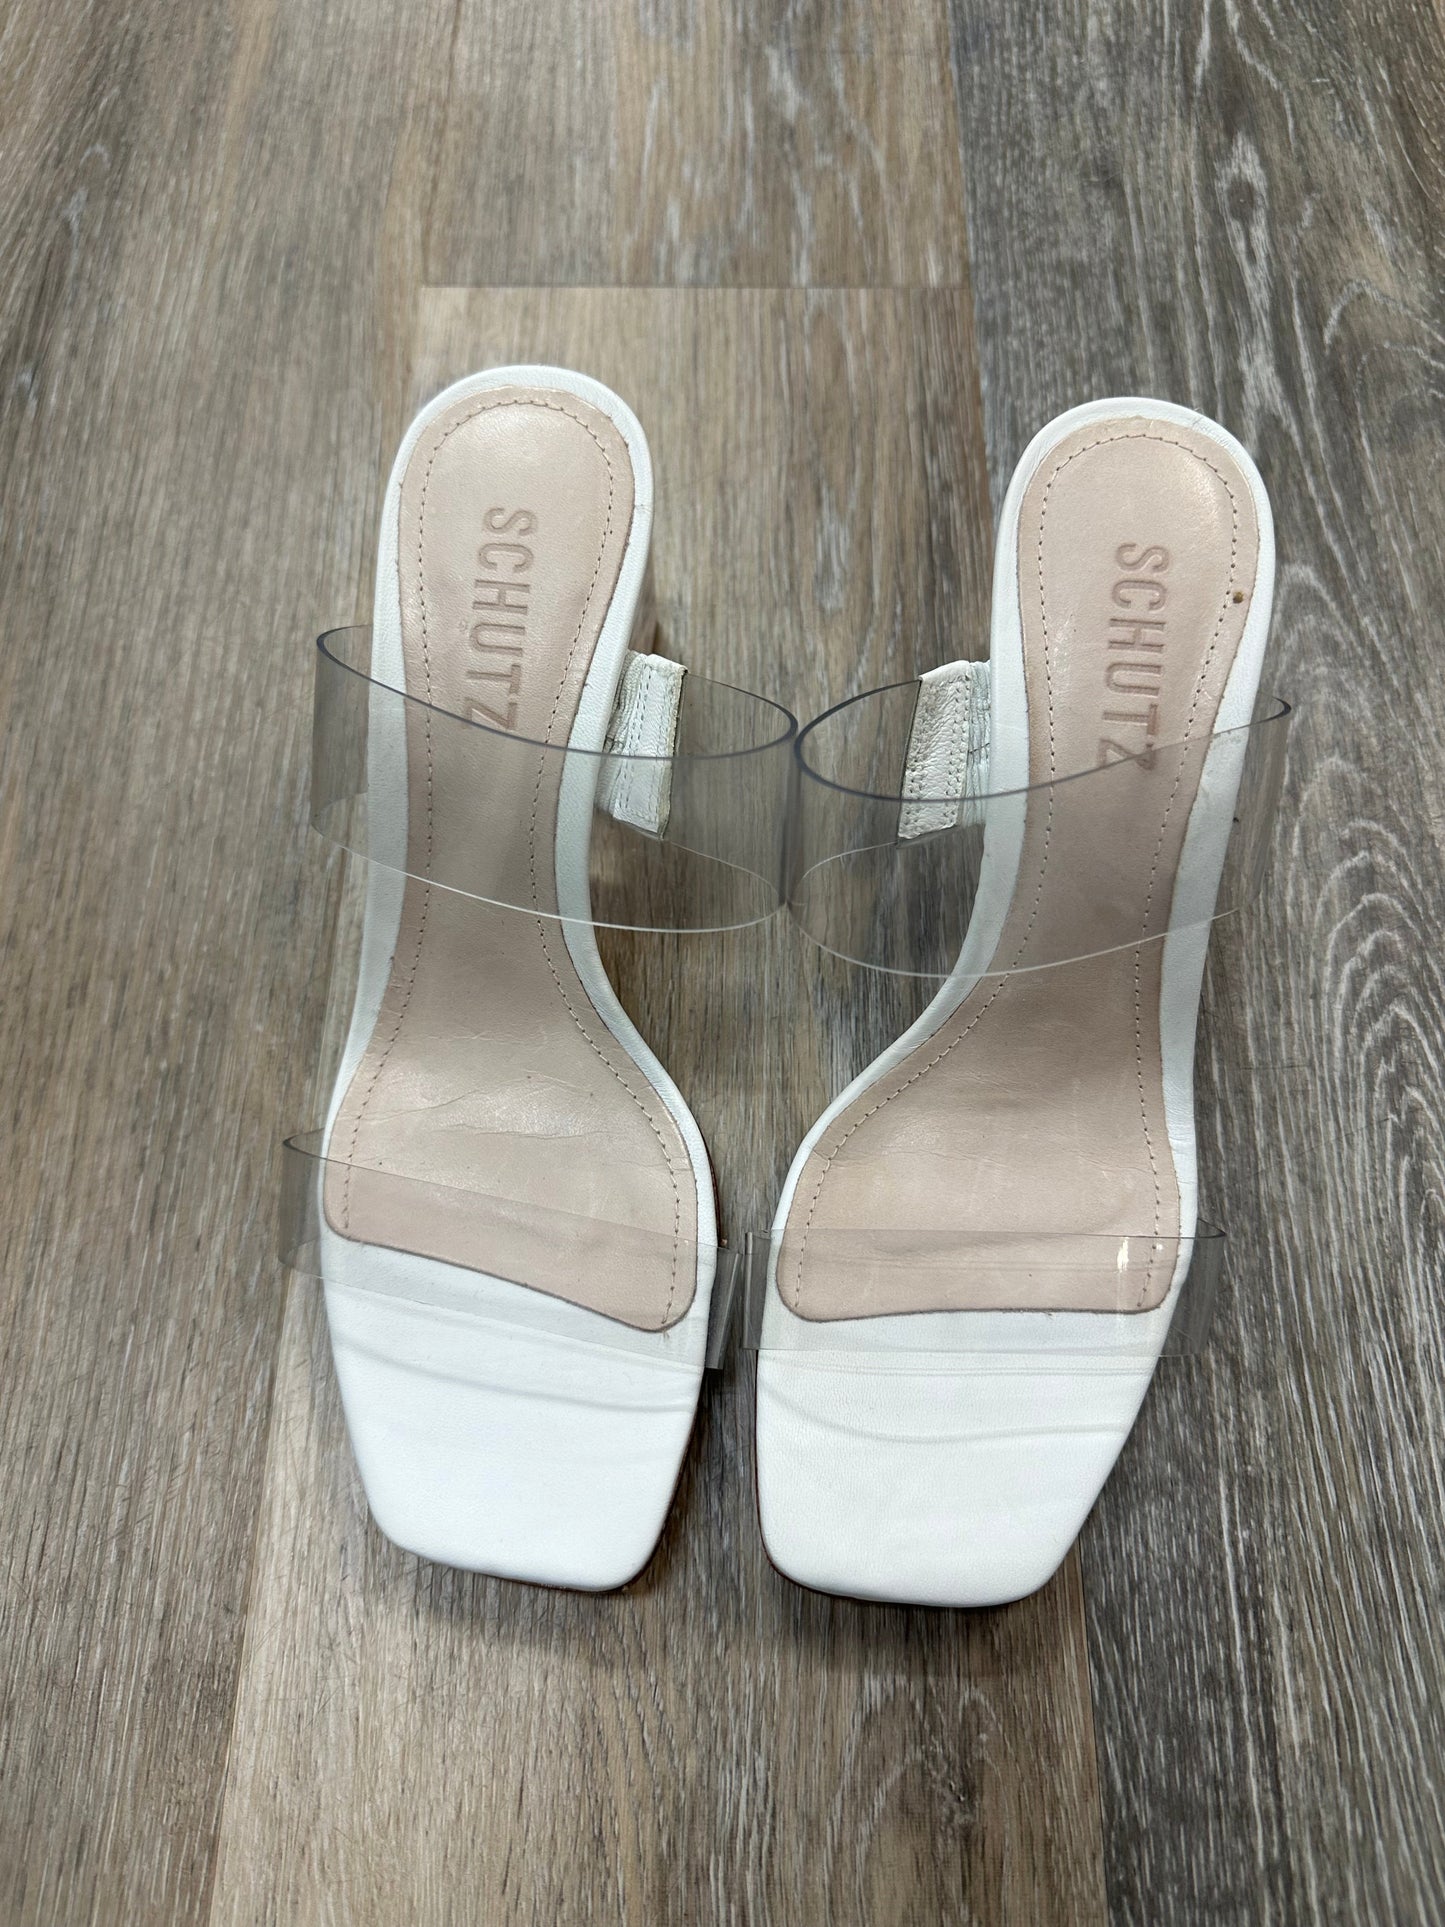 Sandals Heels Block By Schutz  Size: 6.5